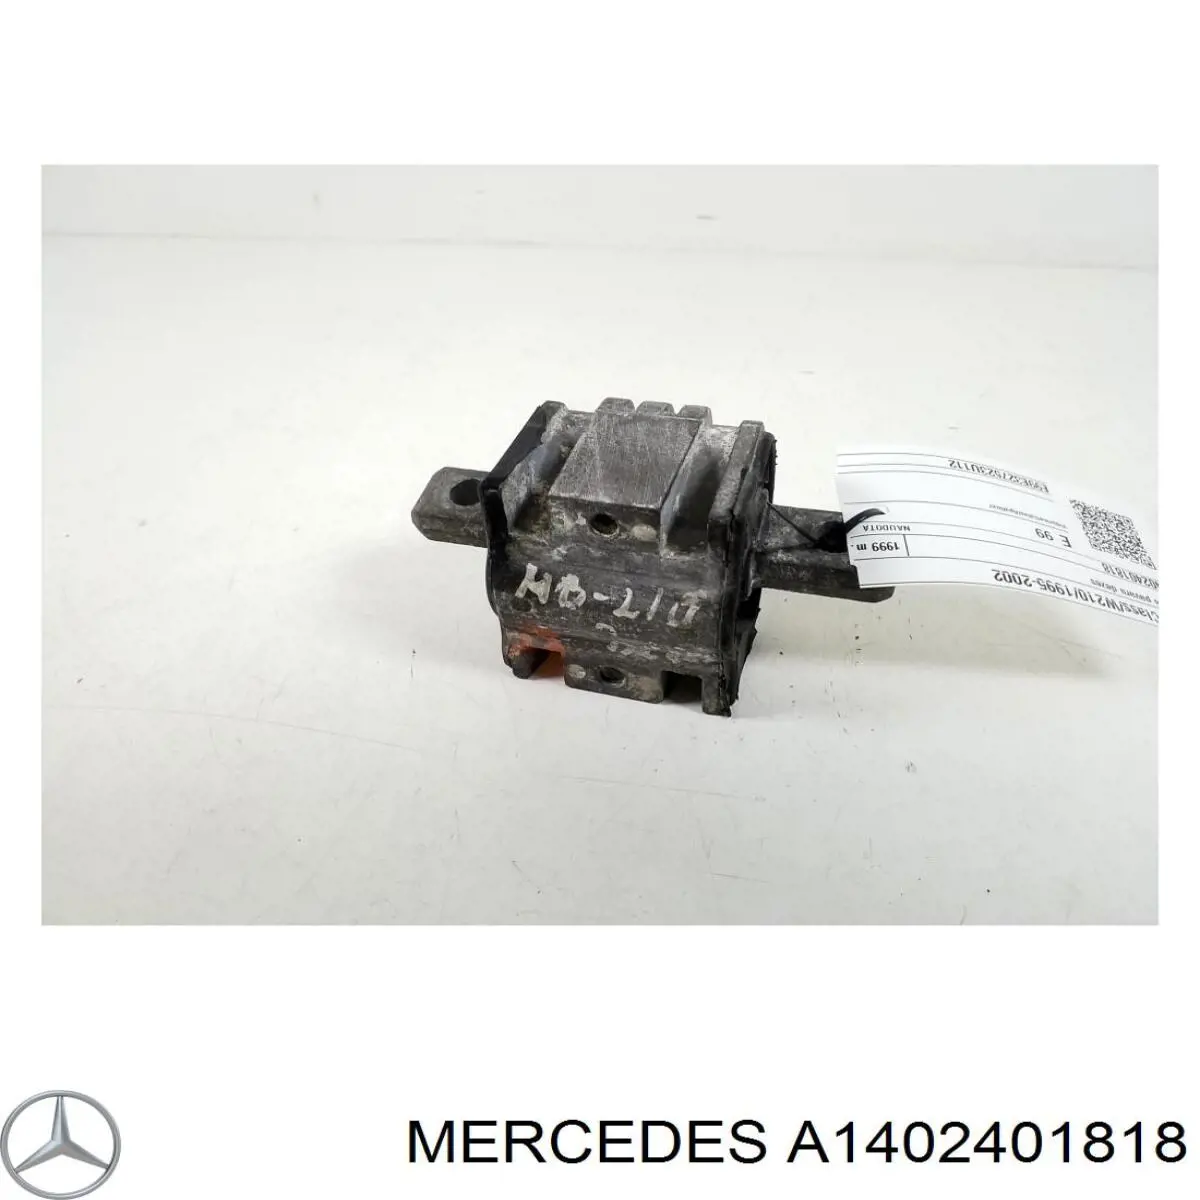 A1402401818 Mercedes montaje de transmision (montaje de caja de cambios)